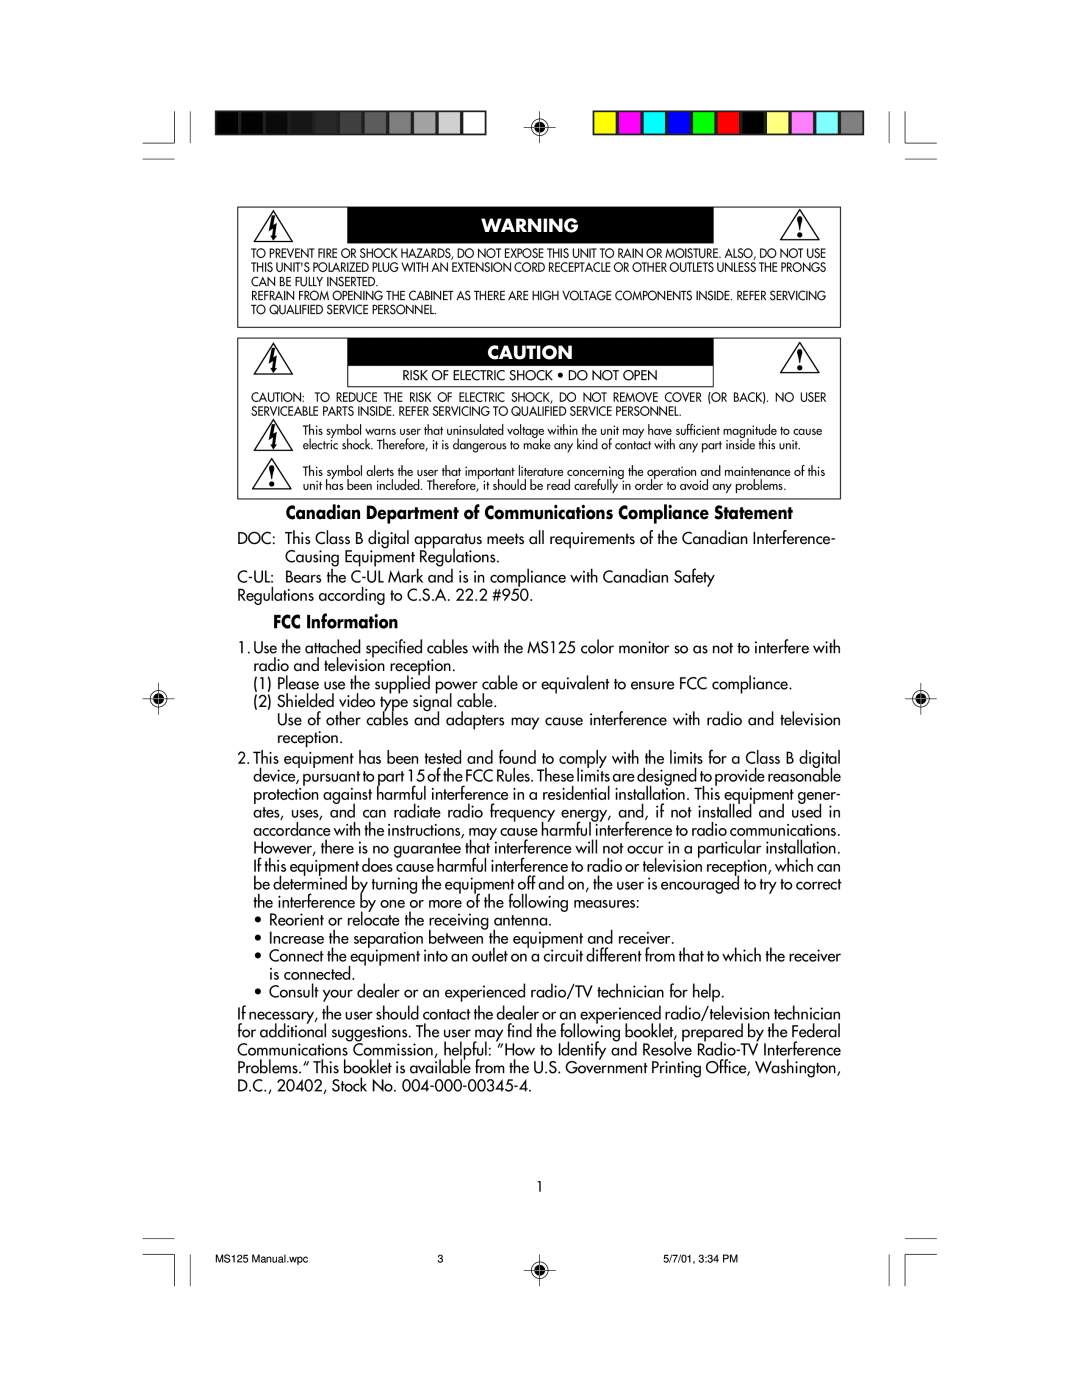 NEC MS125 manual FCC Information 